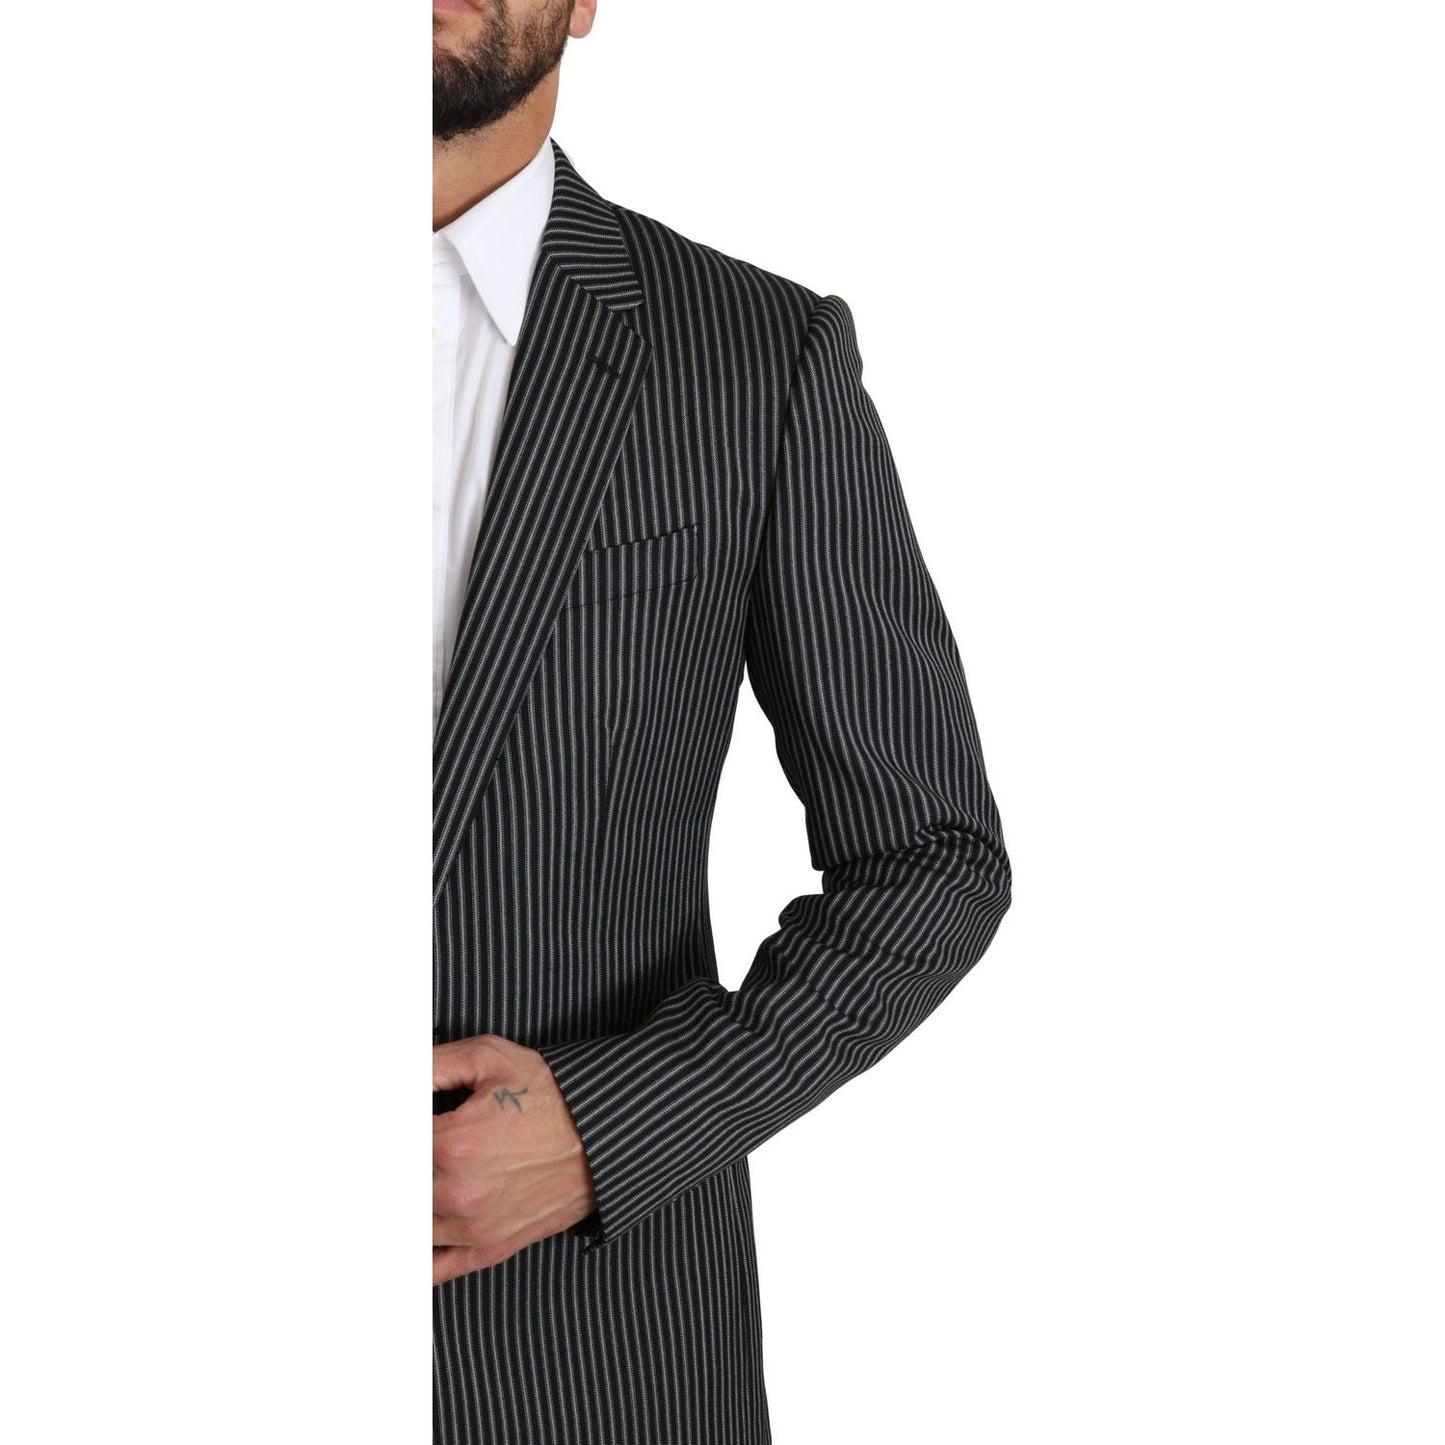 Dolce & Gabbana Elegant Striped Wool-Silk Two-Piece Suit black-white-stripes-2-piece-martini-suit Suit